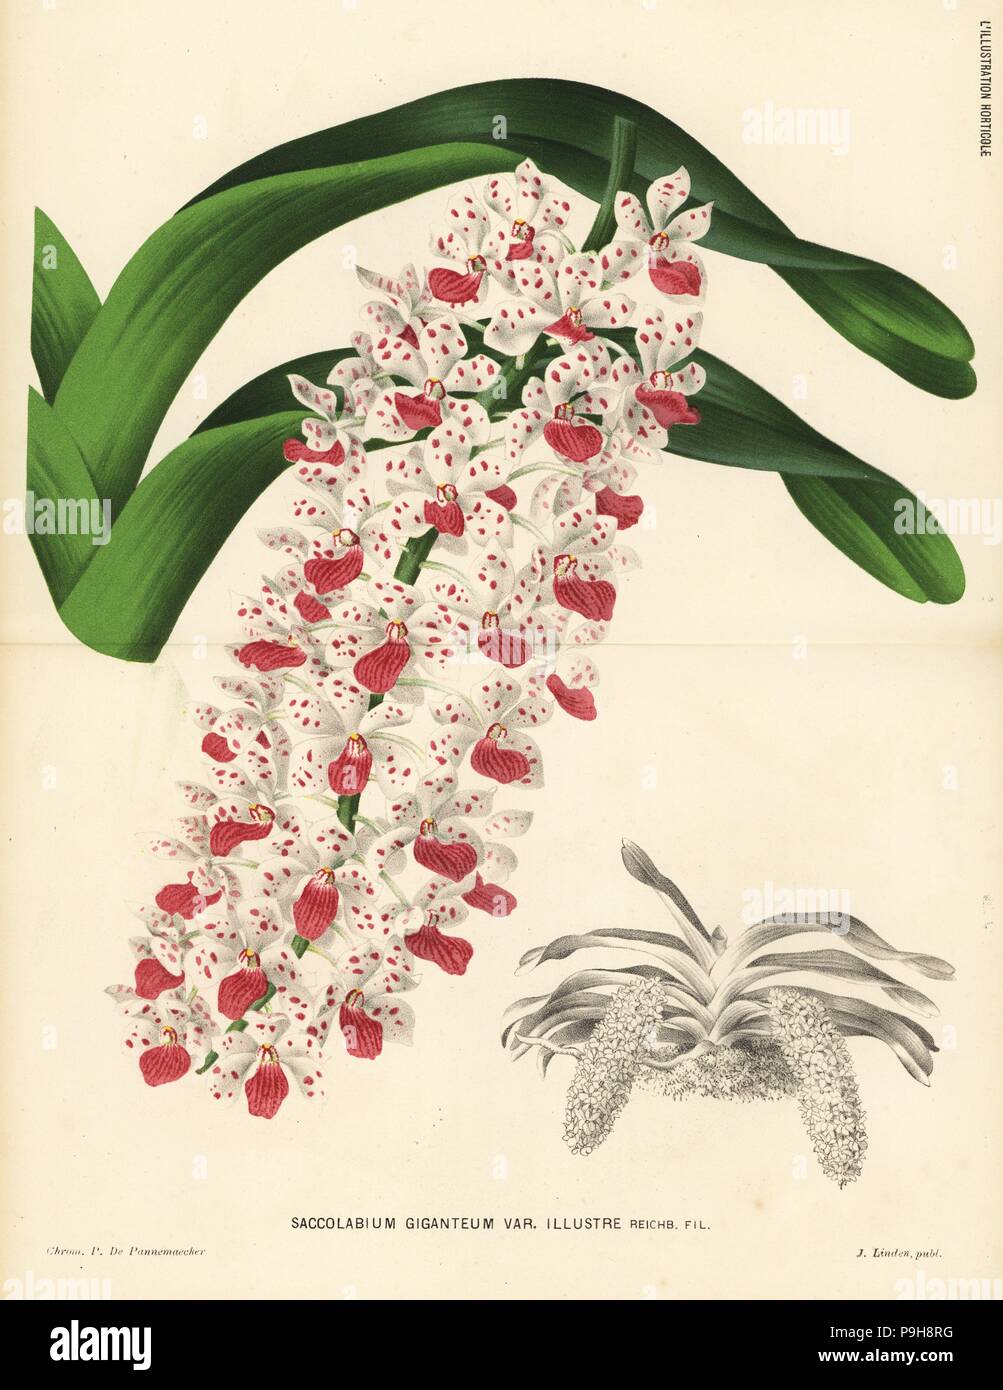 Rhynchostylis gigantea orchid (Saccolabium giganteum var. illustre). Chromolithograph by Pieter de Pannemaeker from Jean Linden's l'Illustration Horticole, Brussels, 1884. Stock Photo